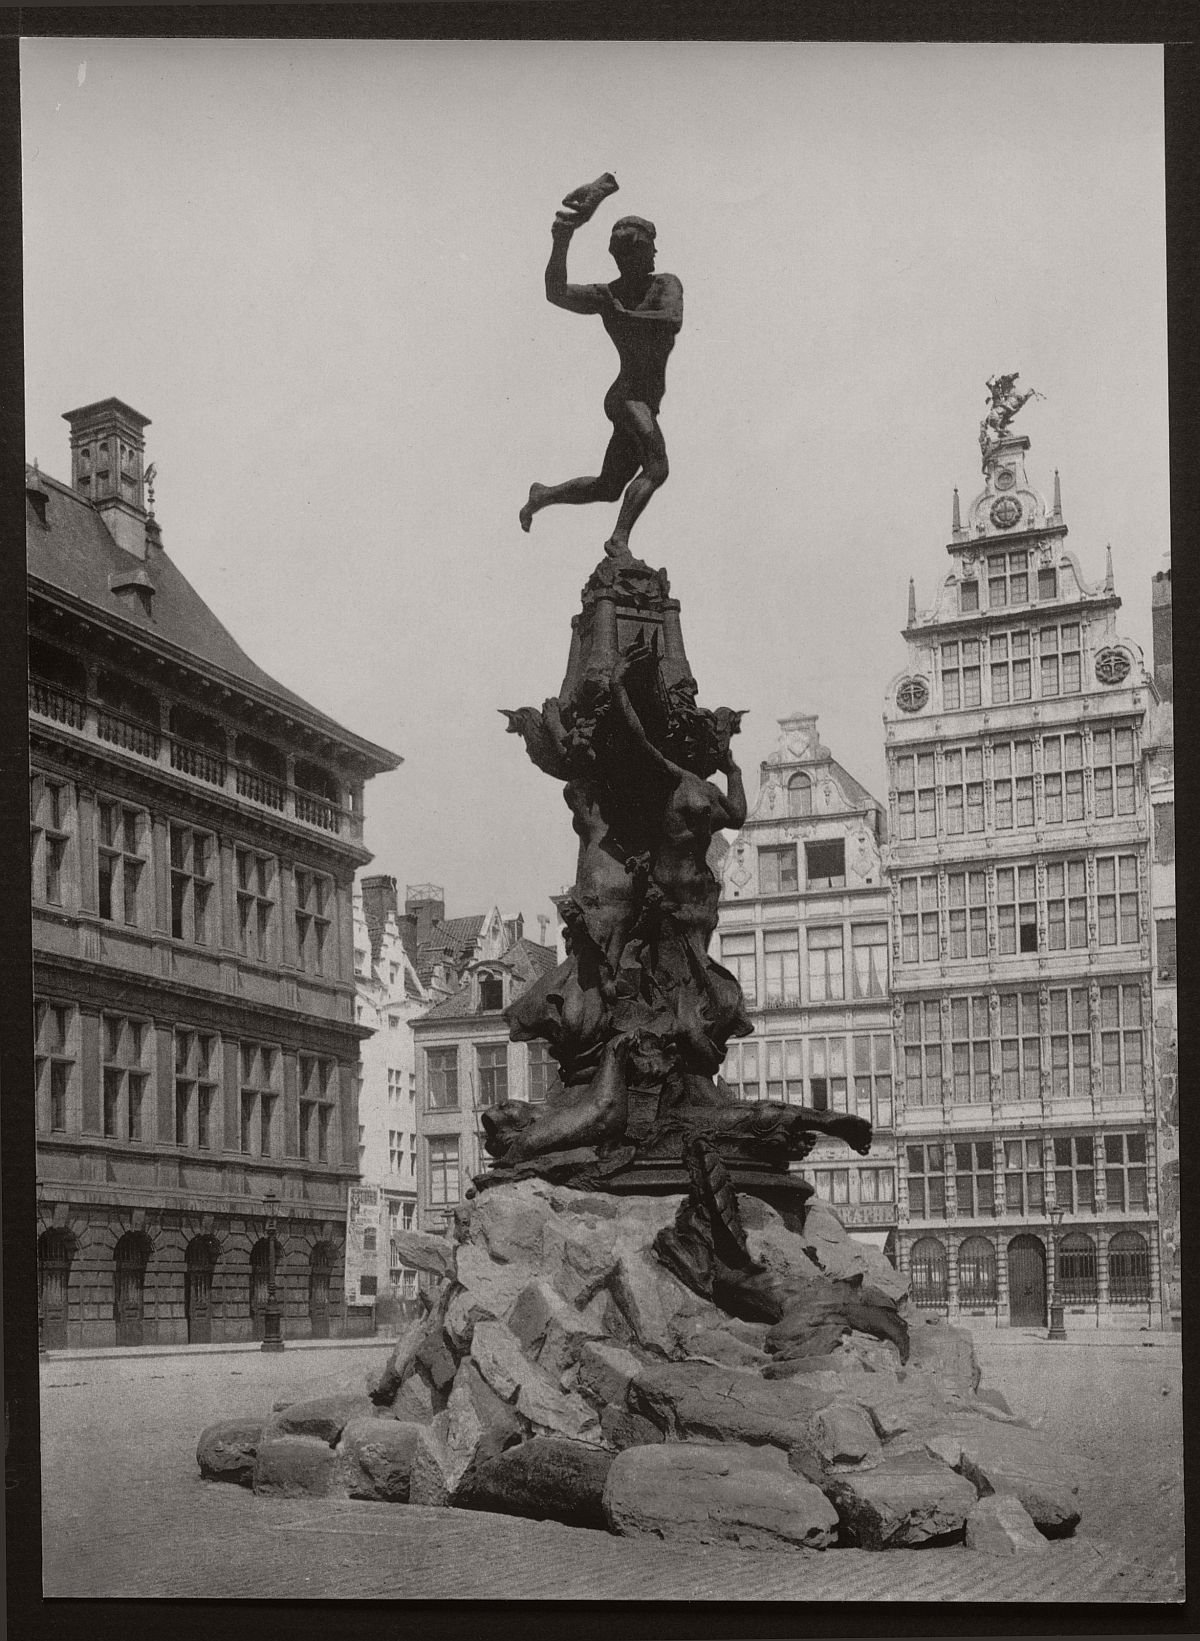 historic-bw-photos-of-antwerp-belgium-in-19th-century-05